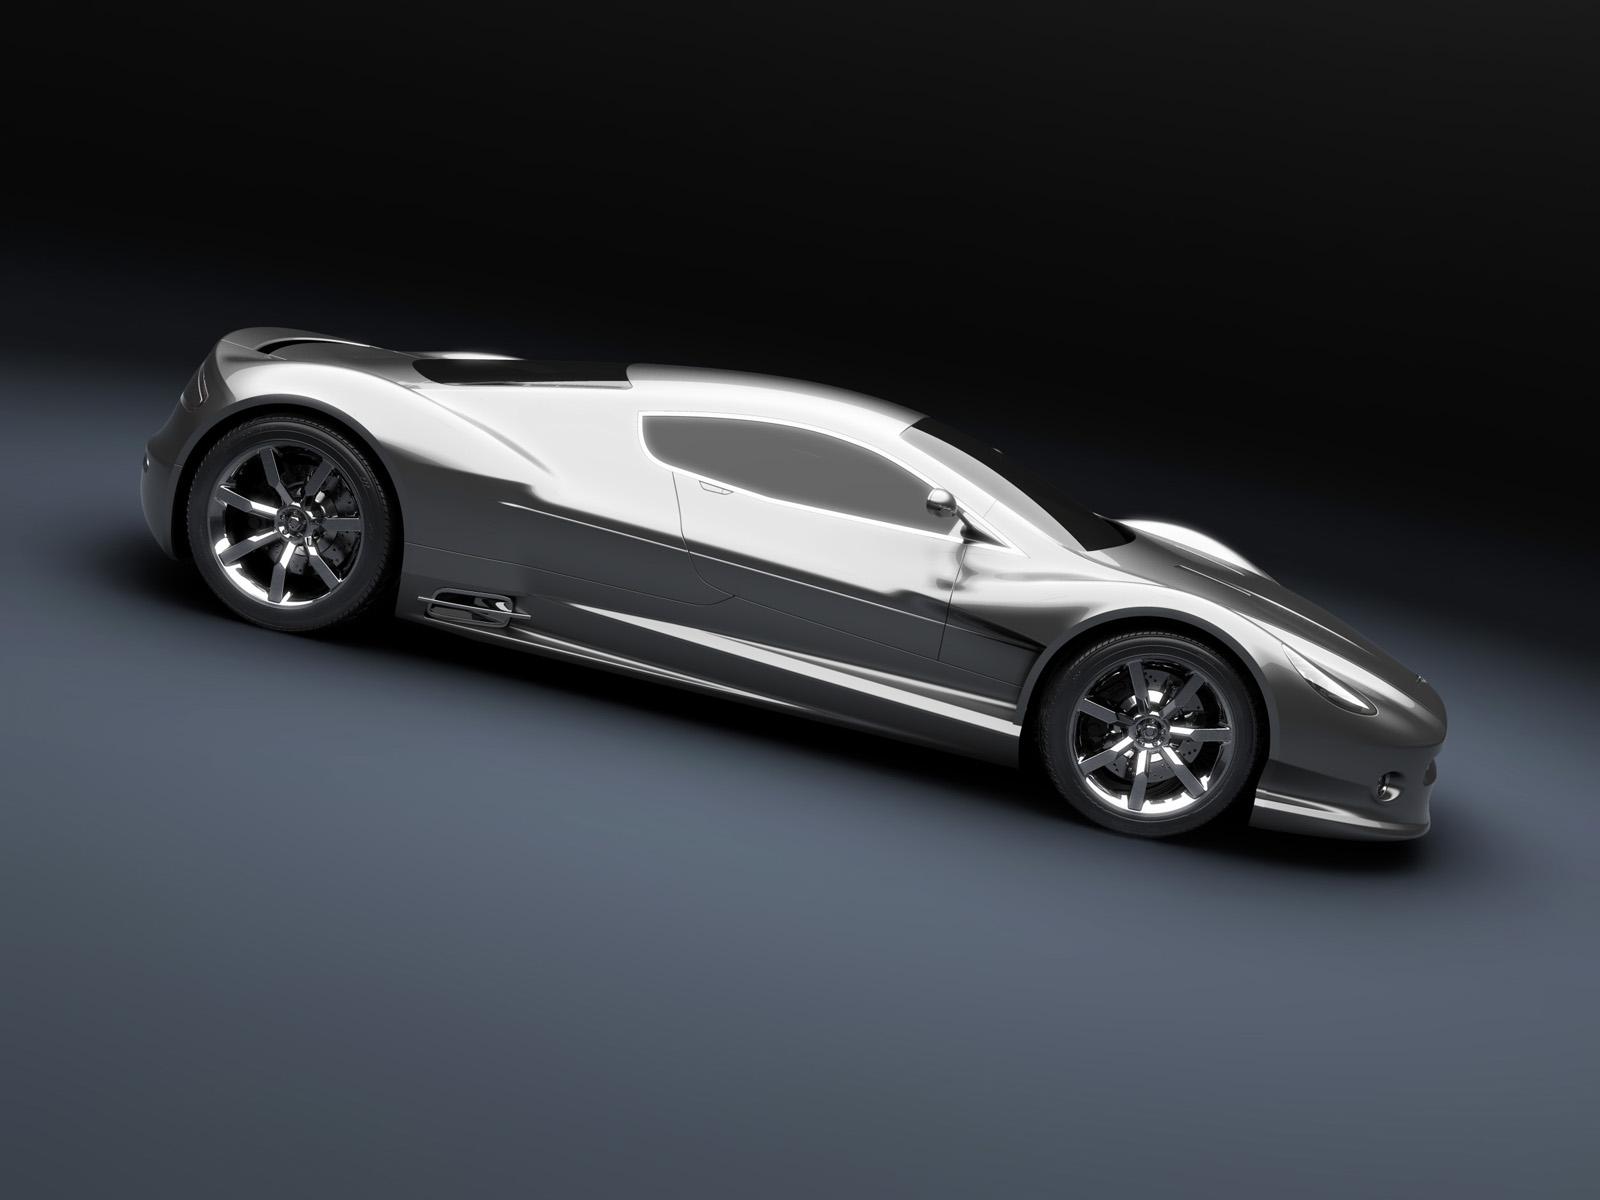 Aston Martin AMV10 Backgrounds, Compatible - PC, Mobile, Gadgets| 1600x1200 px